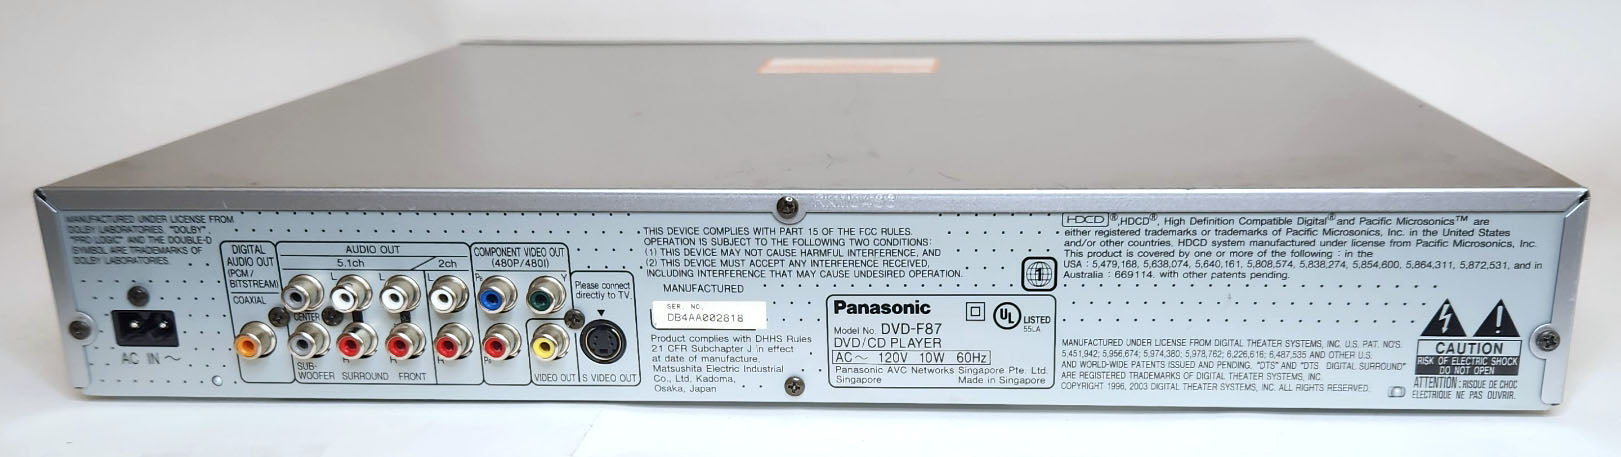 Panasonic DVD-F87 DVD/CD Player, 5 Disc Carousel Changer - Rear